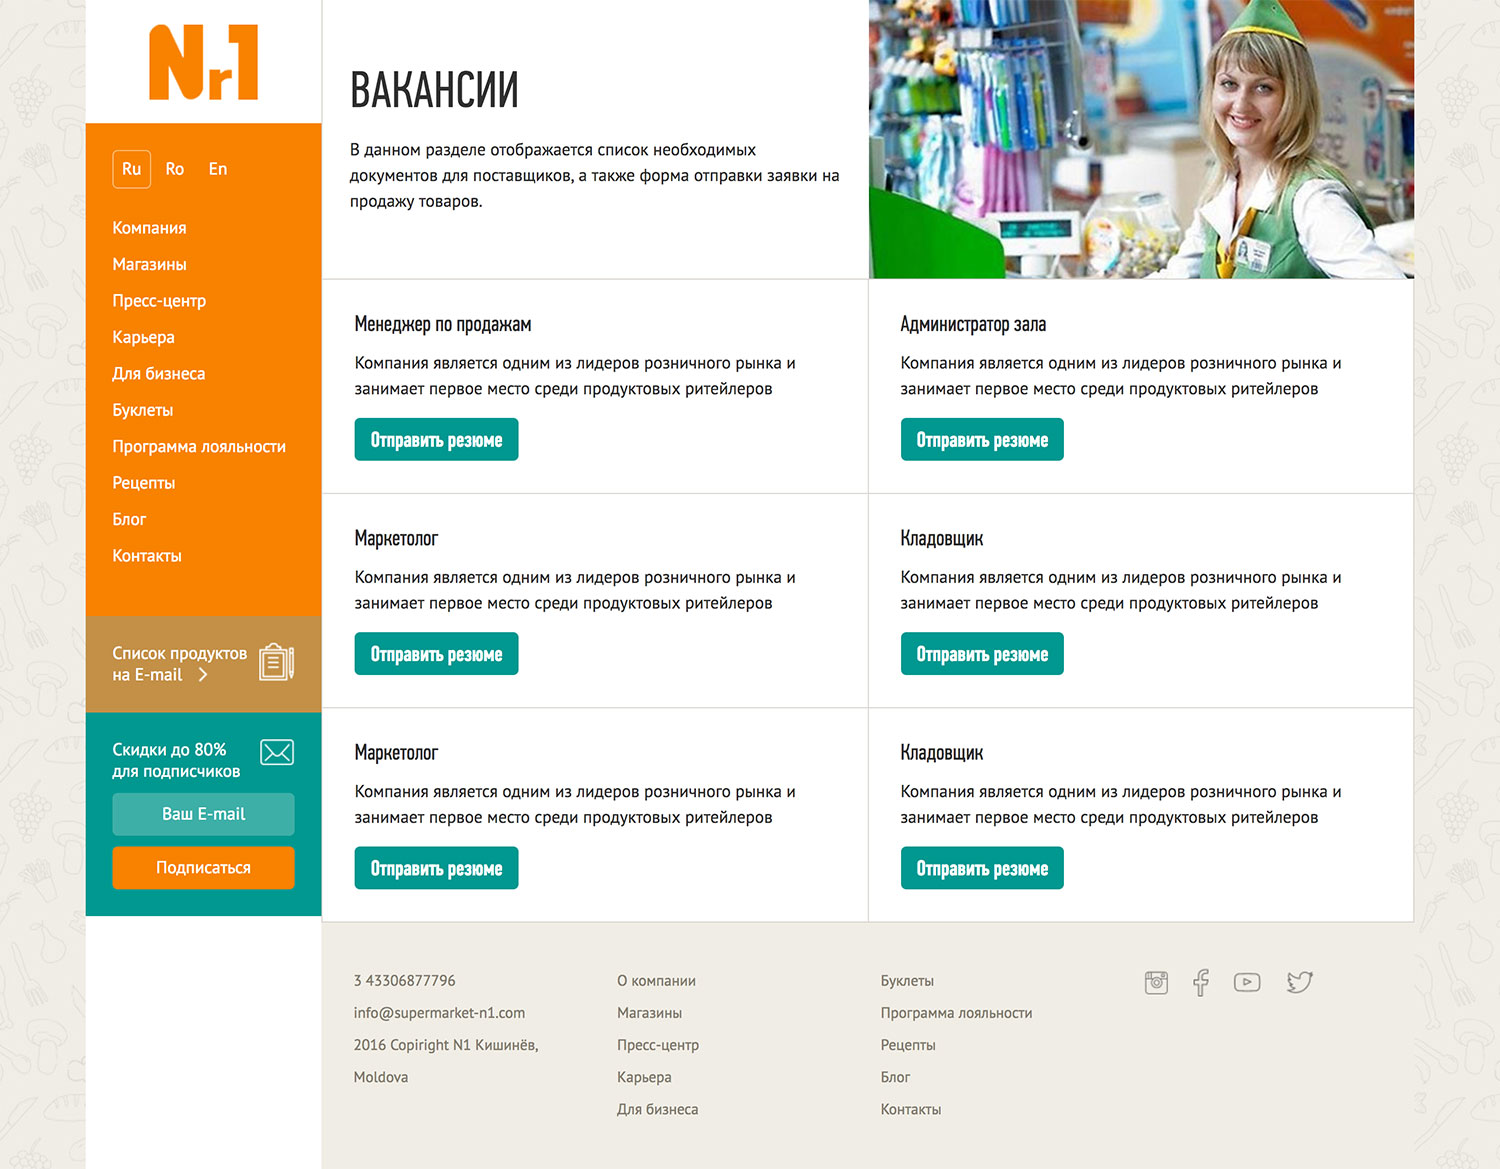 Website of supermarket nr1.md – impressive, fast and stylish